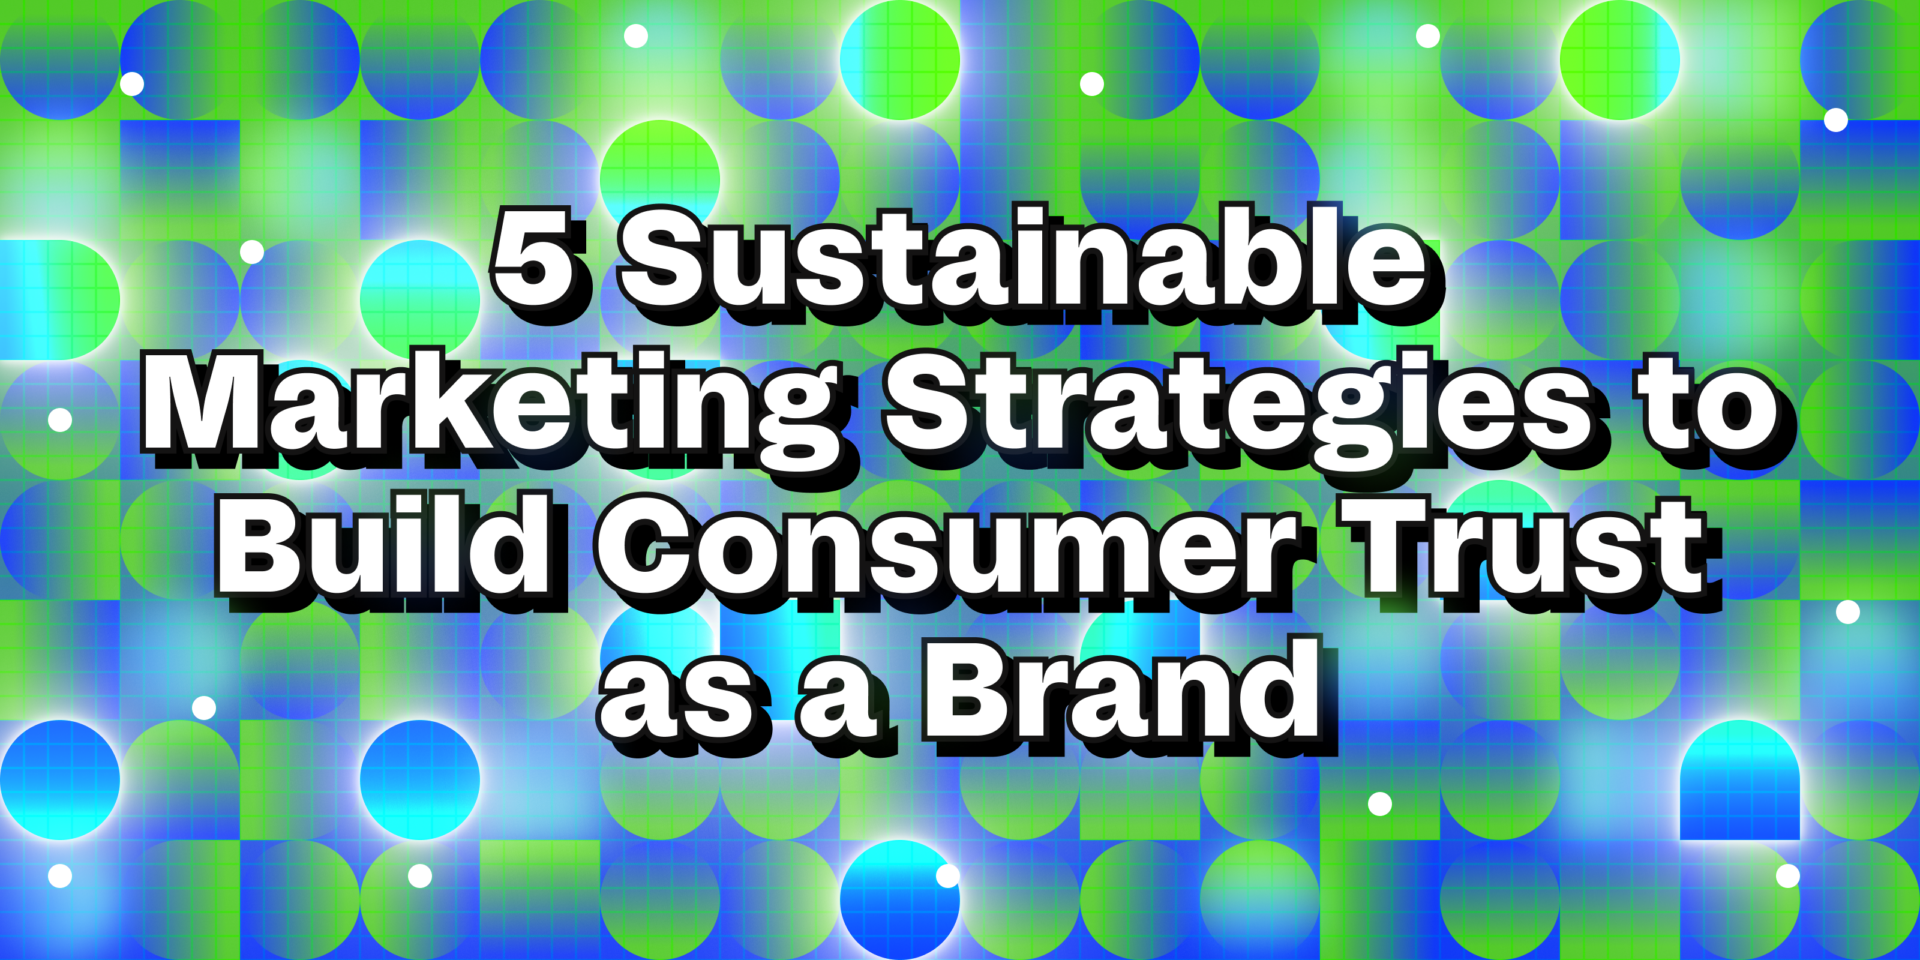 Sustainable marketing strategies